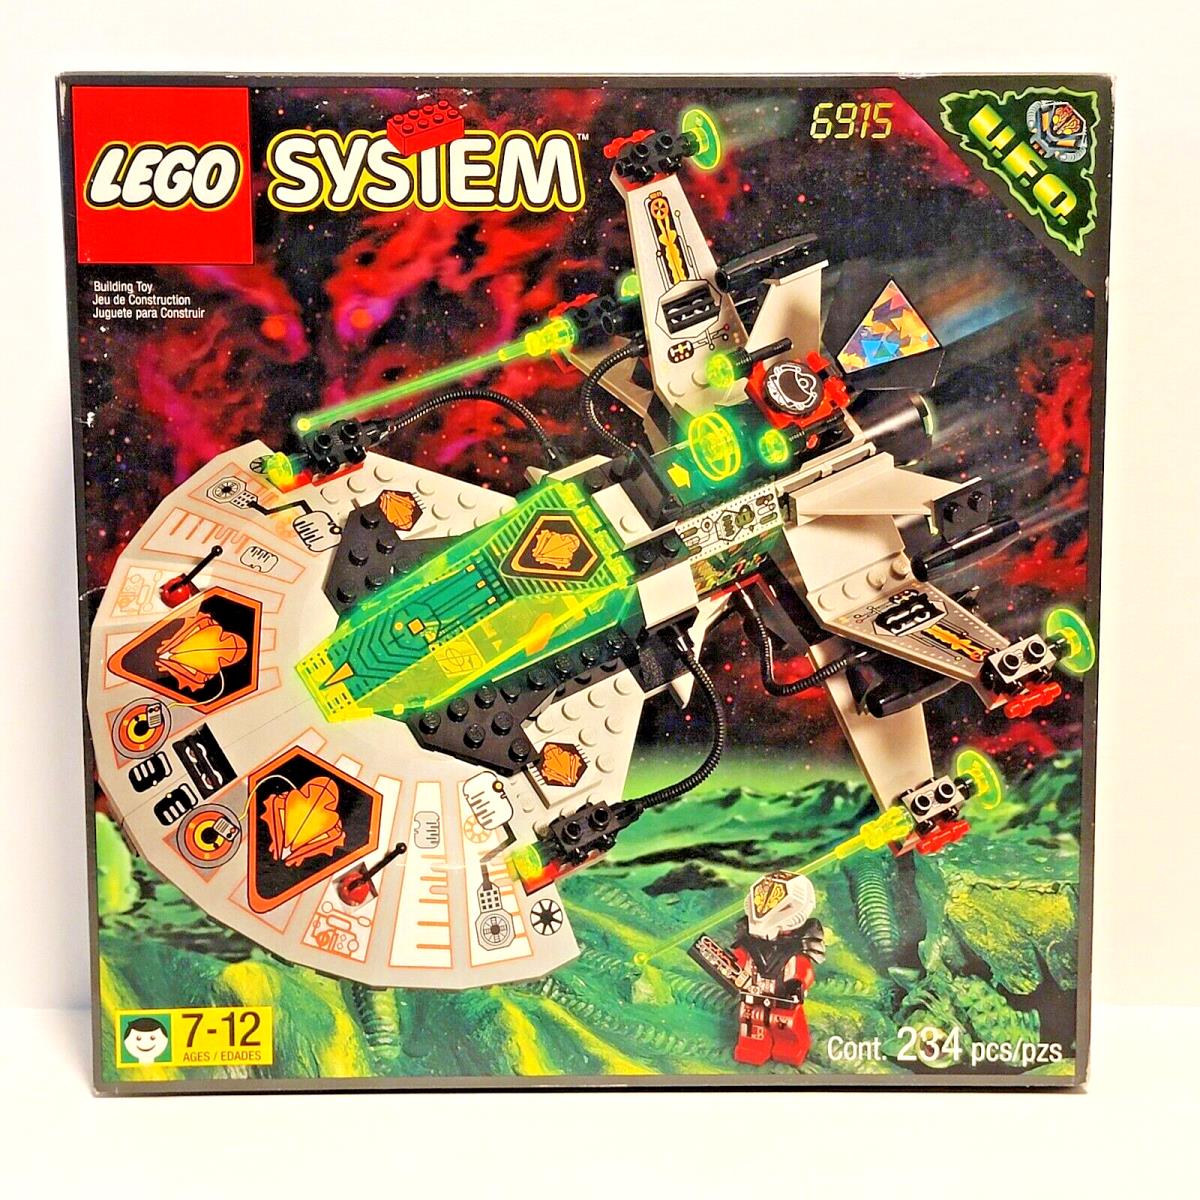 1997 Lego System Ufo 6915 Warp Wing Fighter 234 Pcs Nos Complete Set